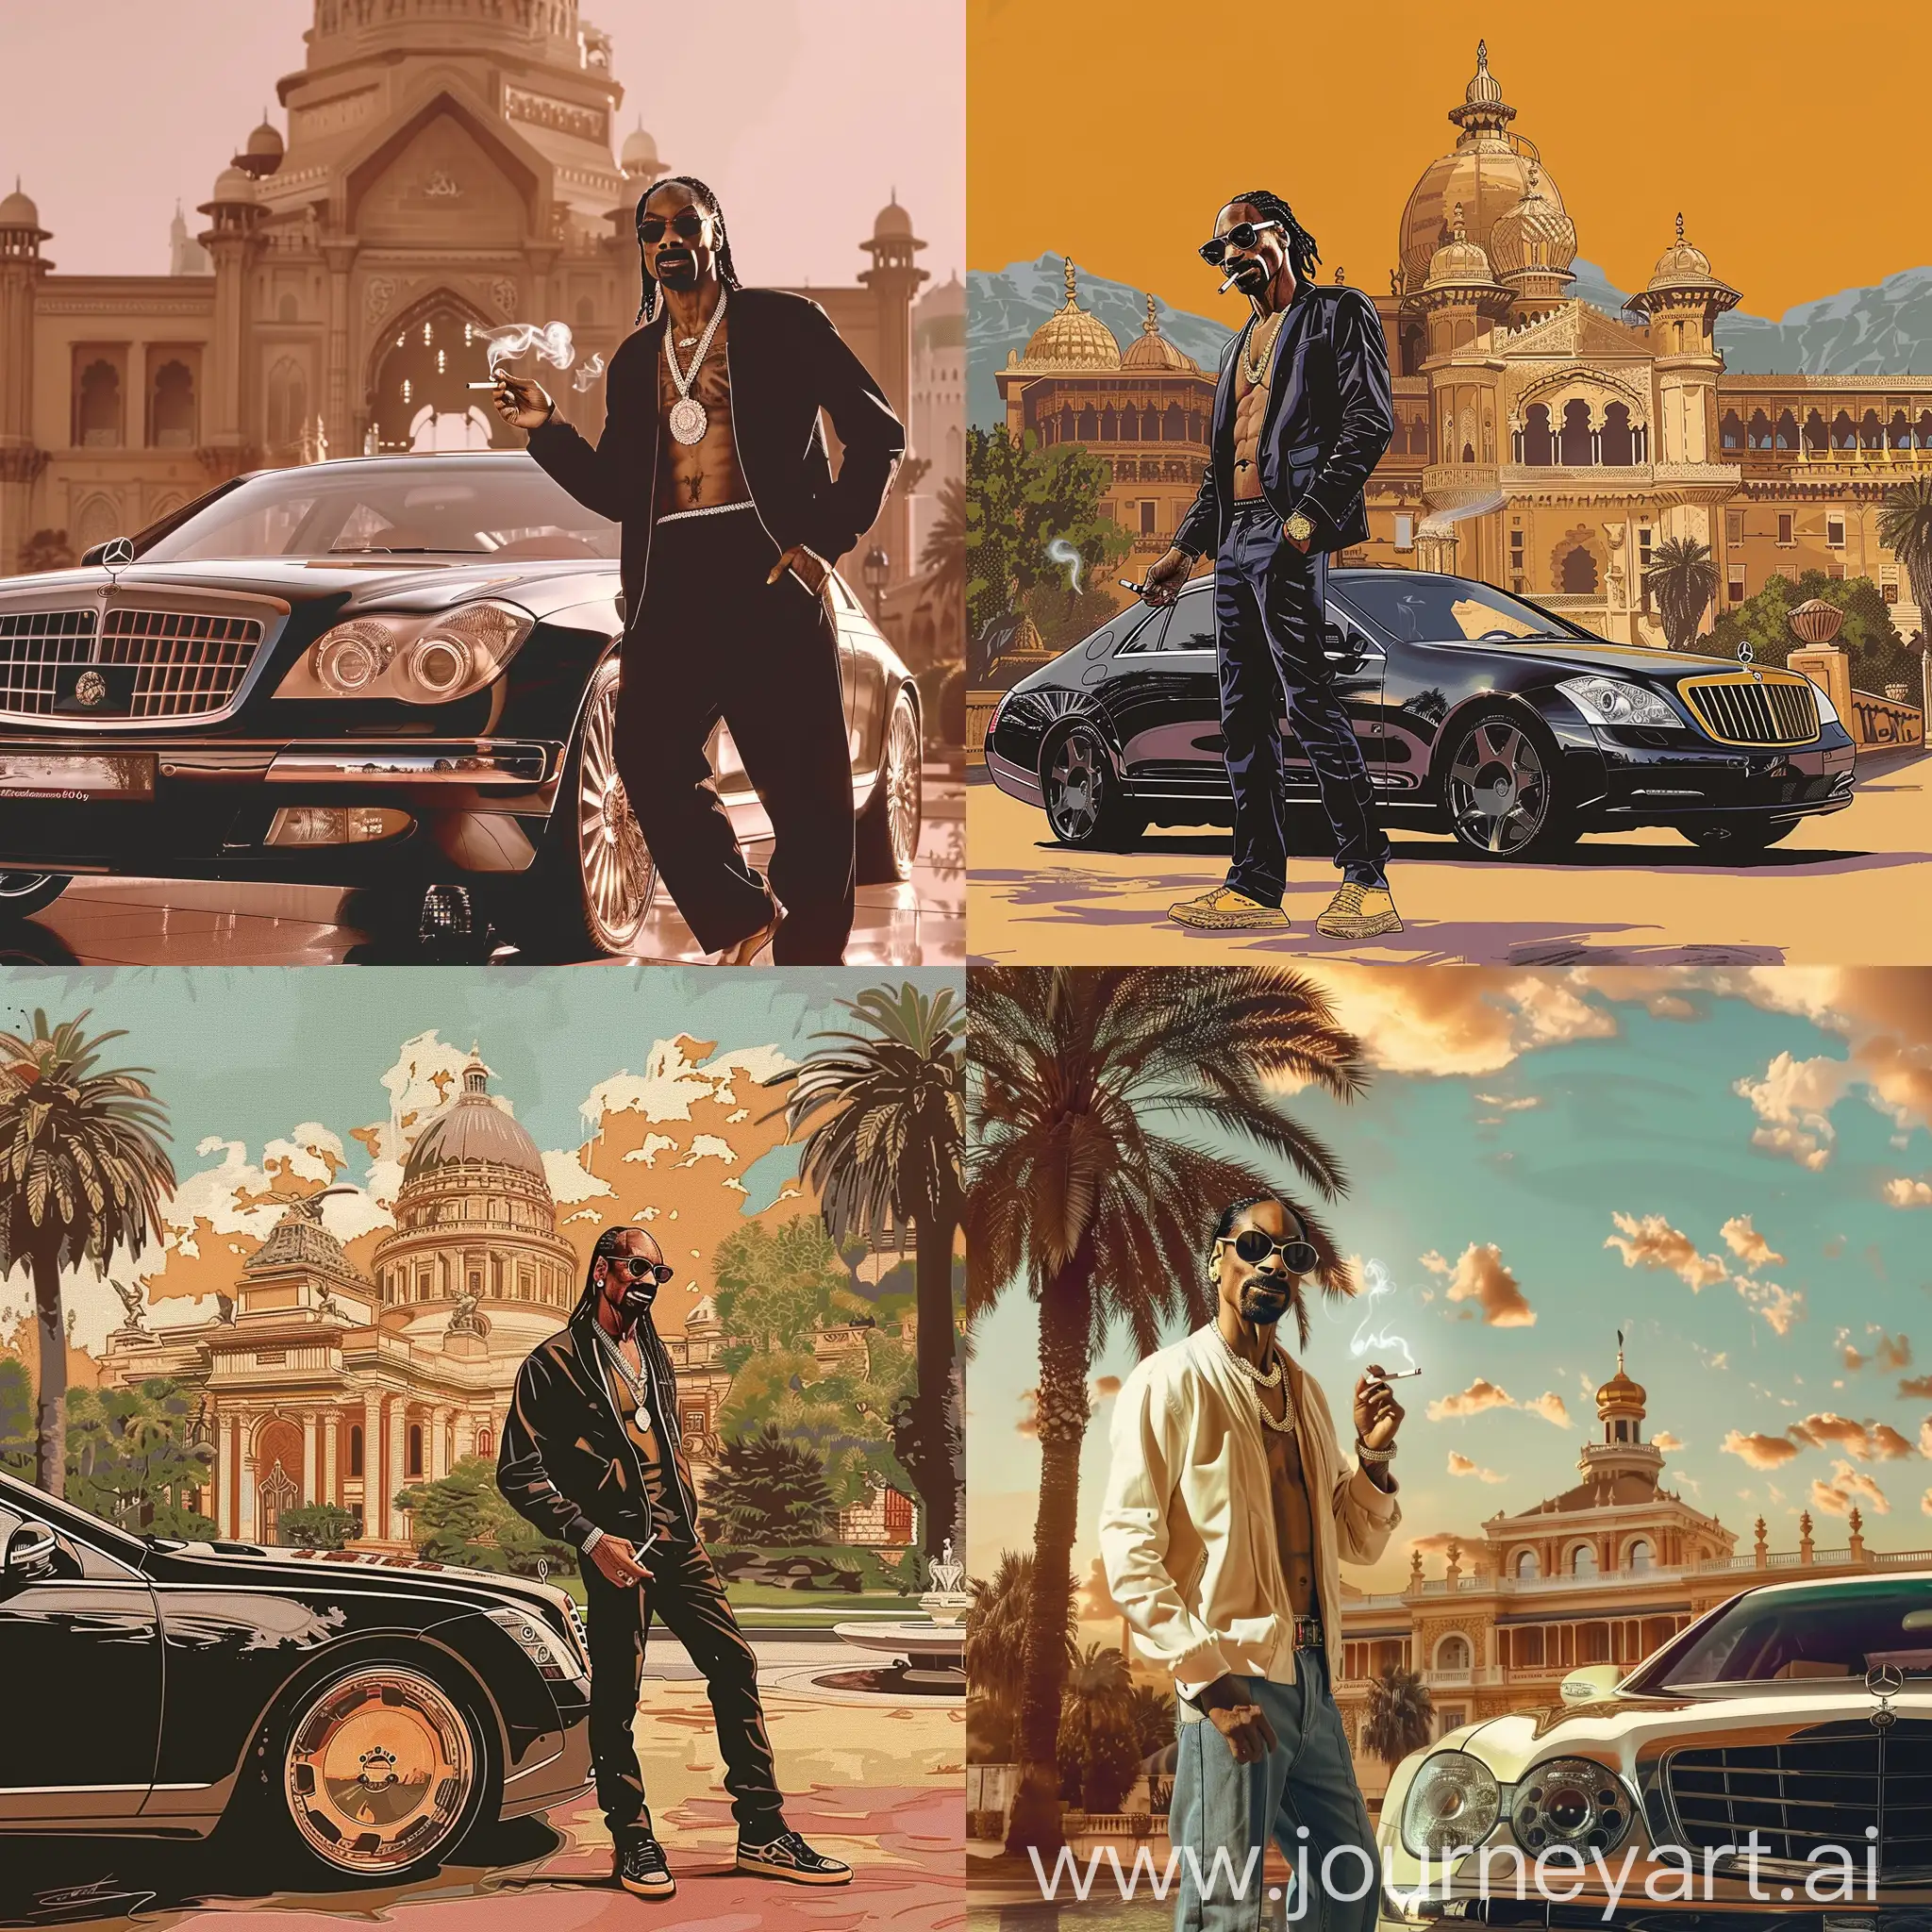 Snoop-Dogg-Smoking-by-Maybach-Against-Palace-Backdrop